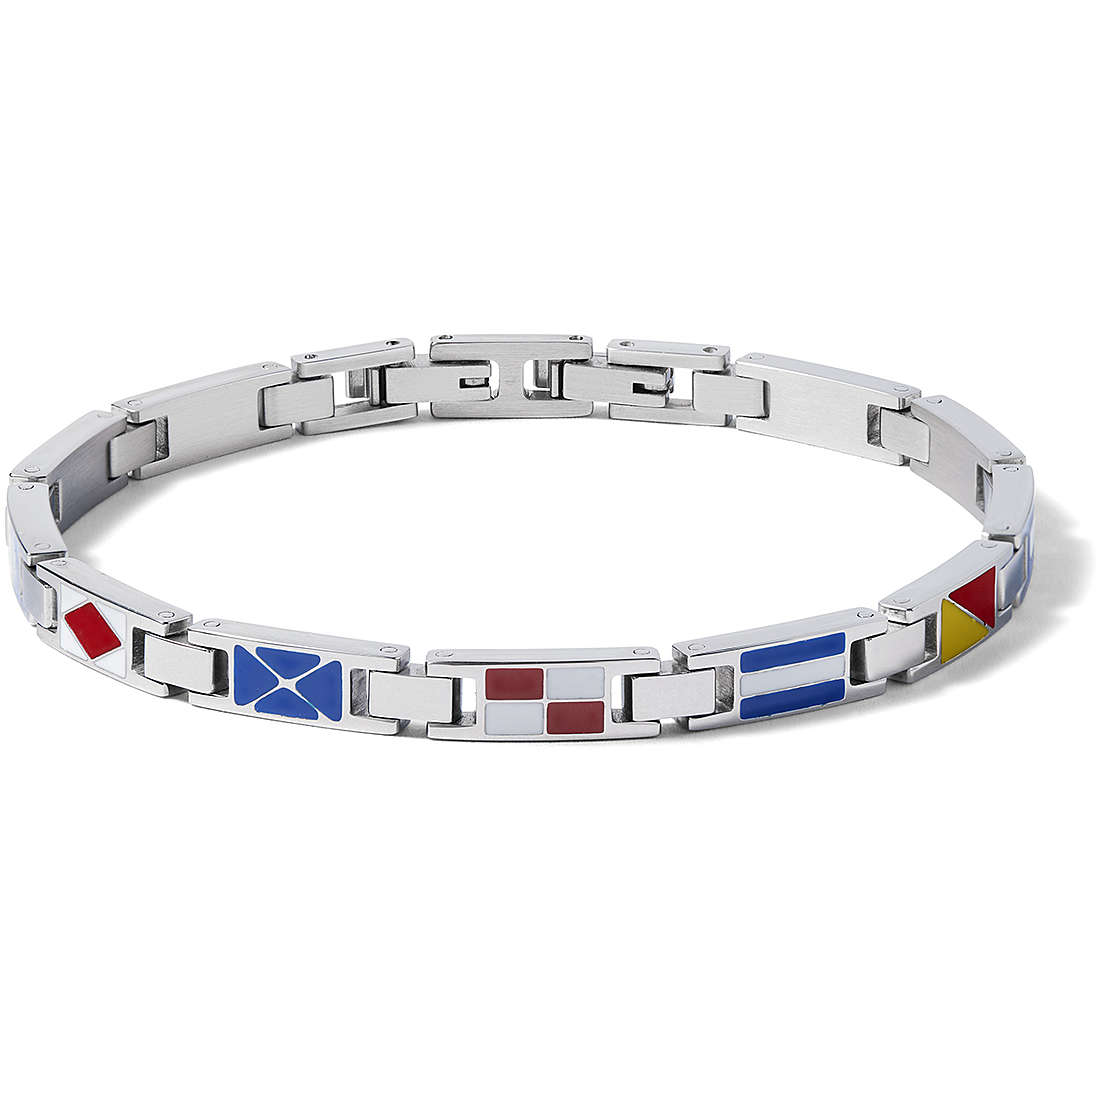 bracelet man jewellery Comete UBR 1075